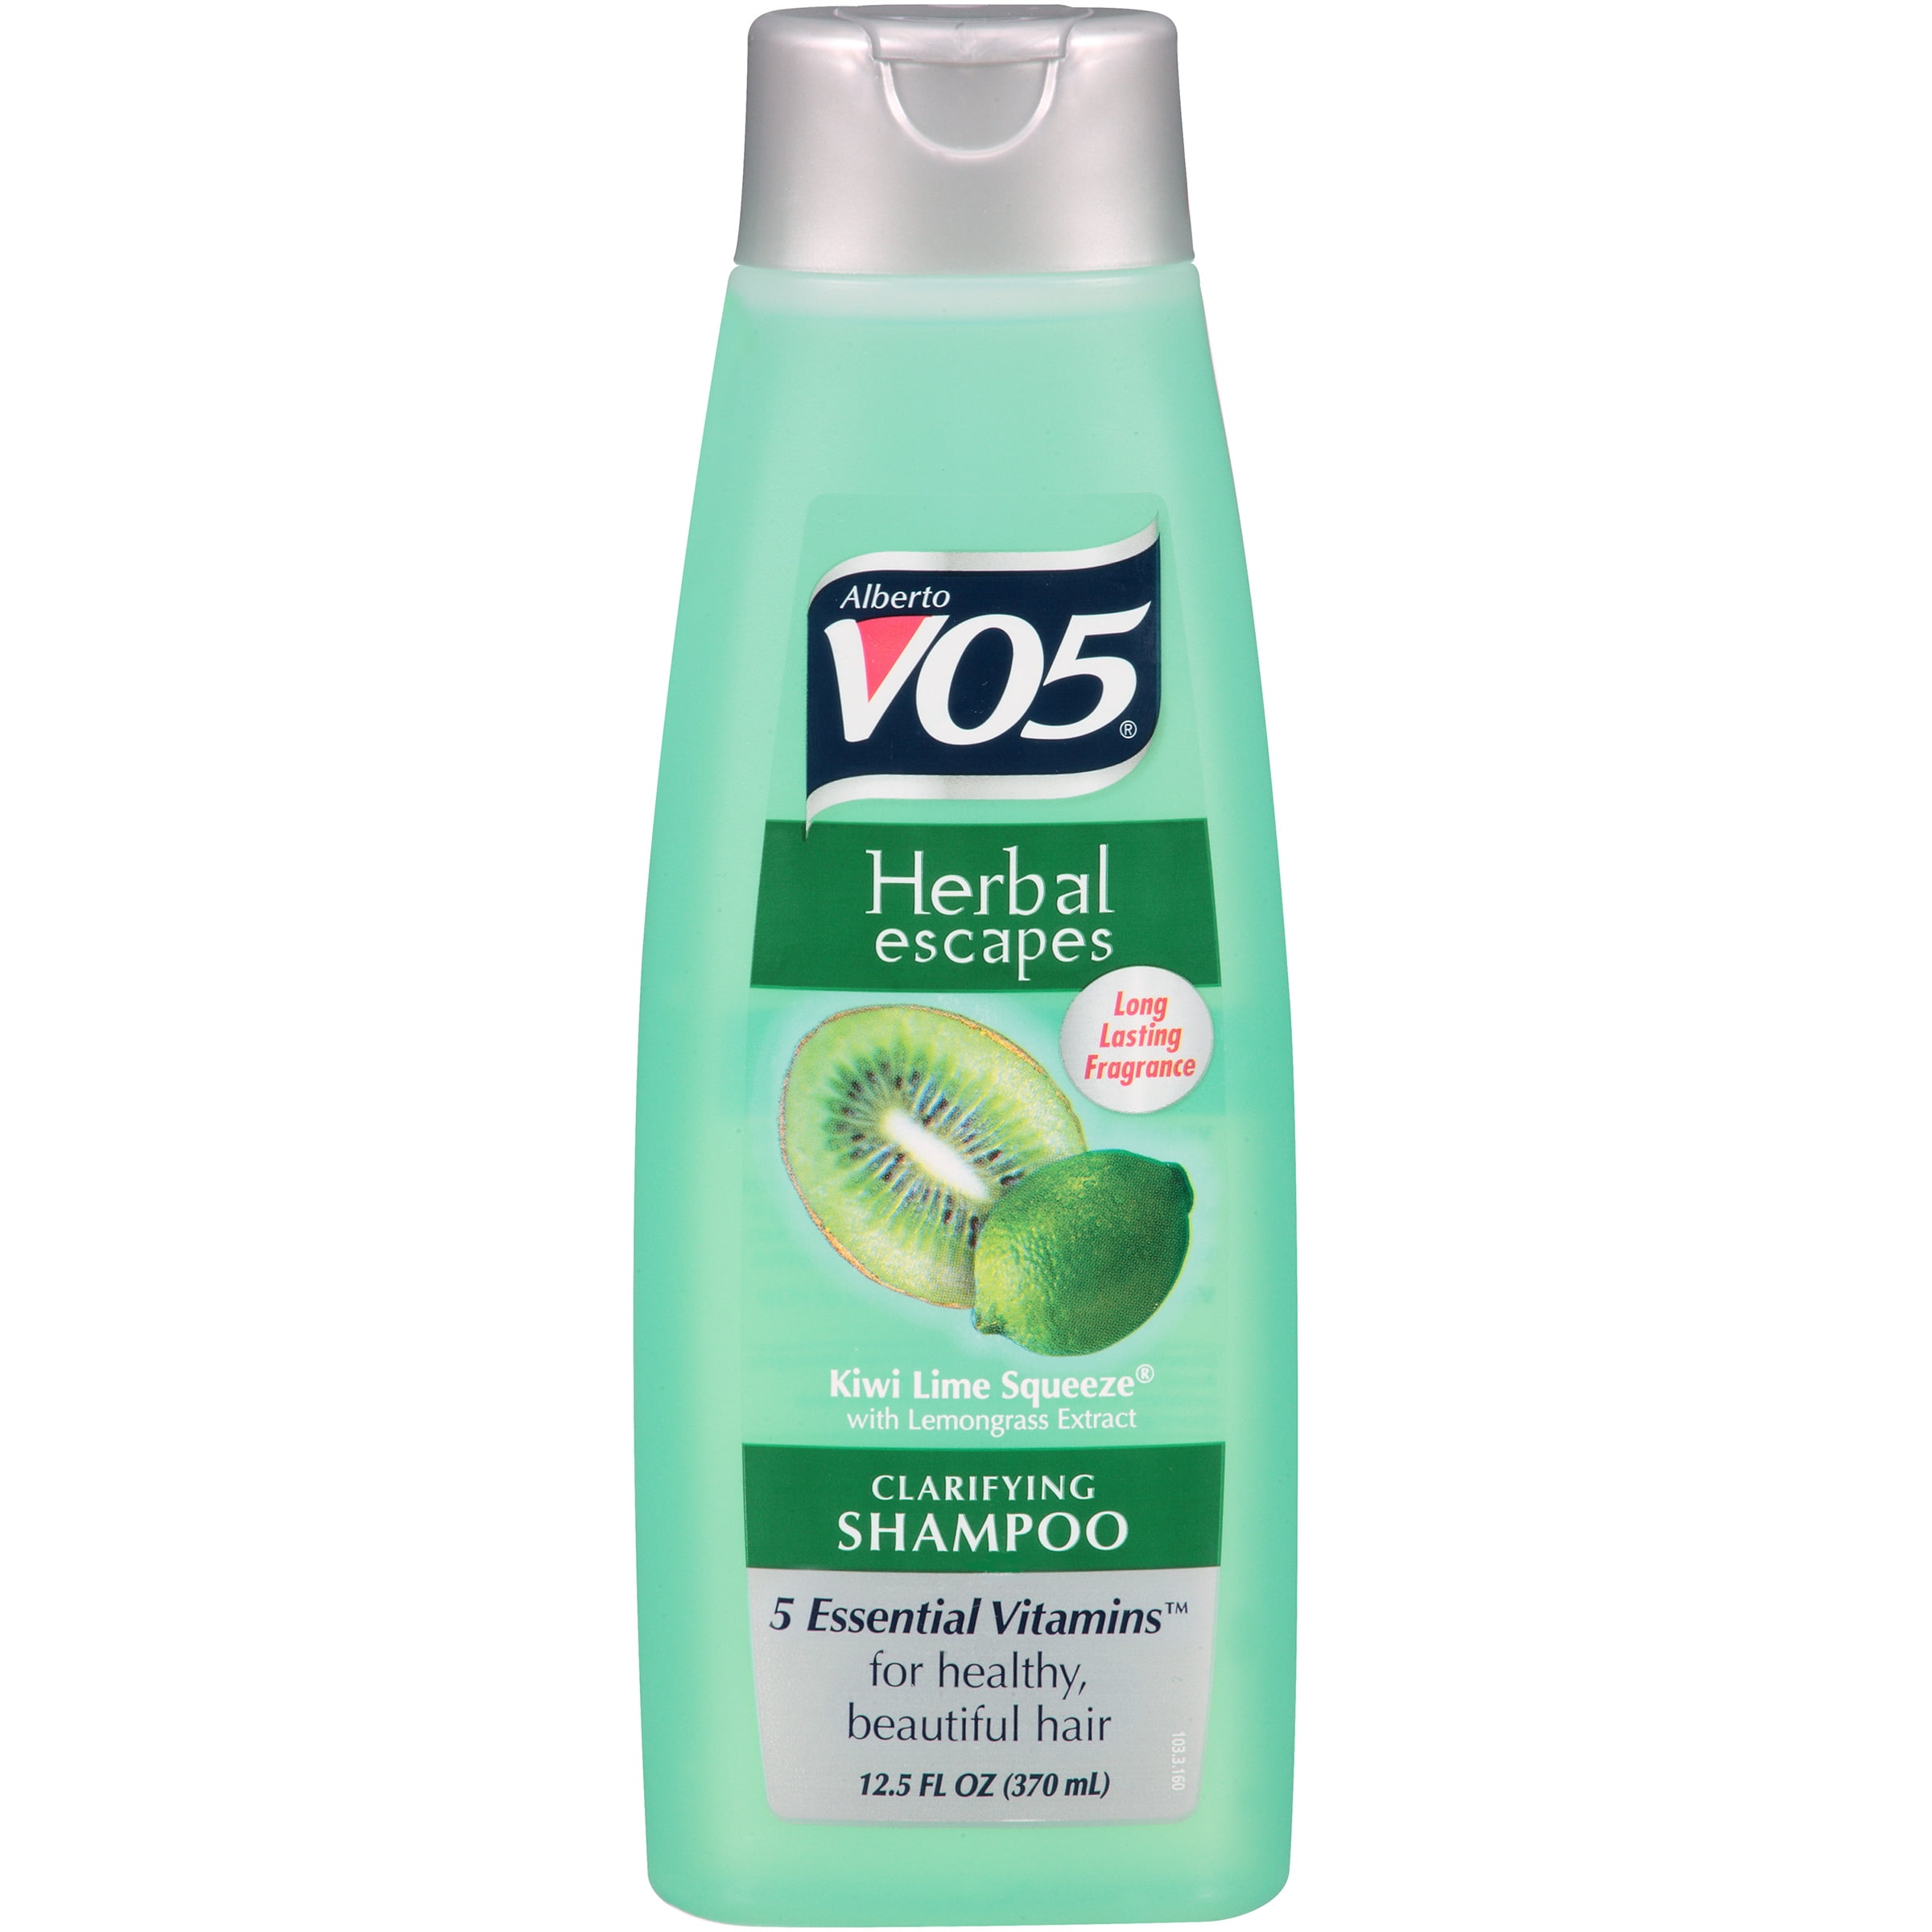 Kemiker civile hente Alberto VO5 Herbal Escapes Clarifying Shampoo, Kiwi Lime Squeeze, 12.5 Oz -  Walmart.com